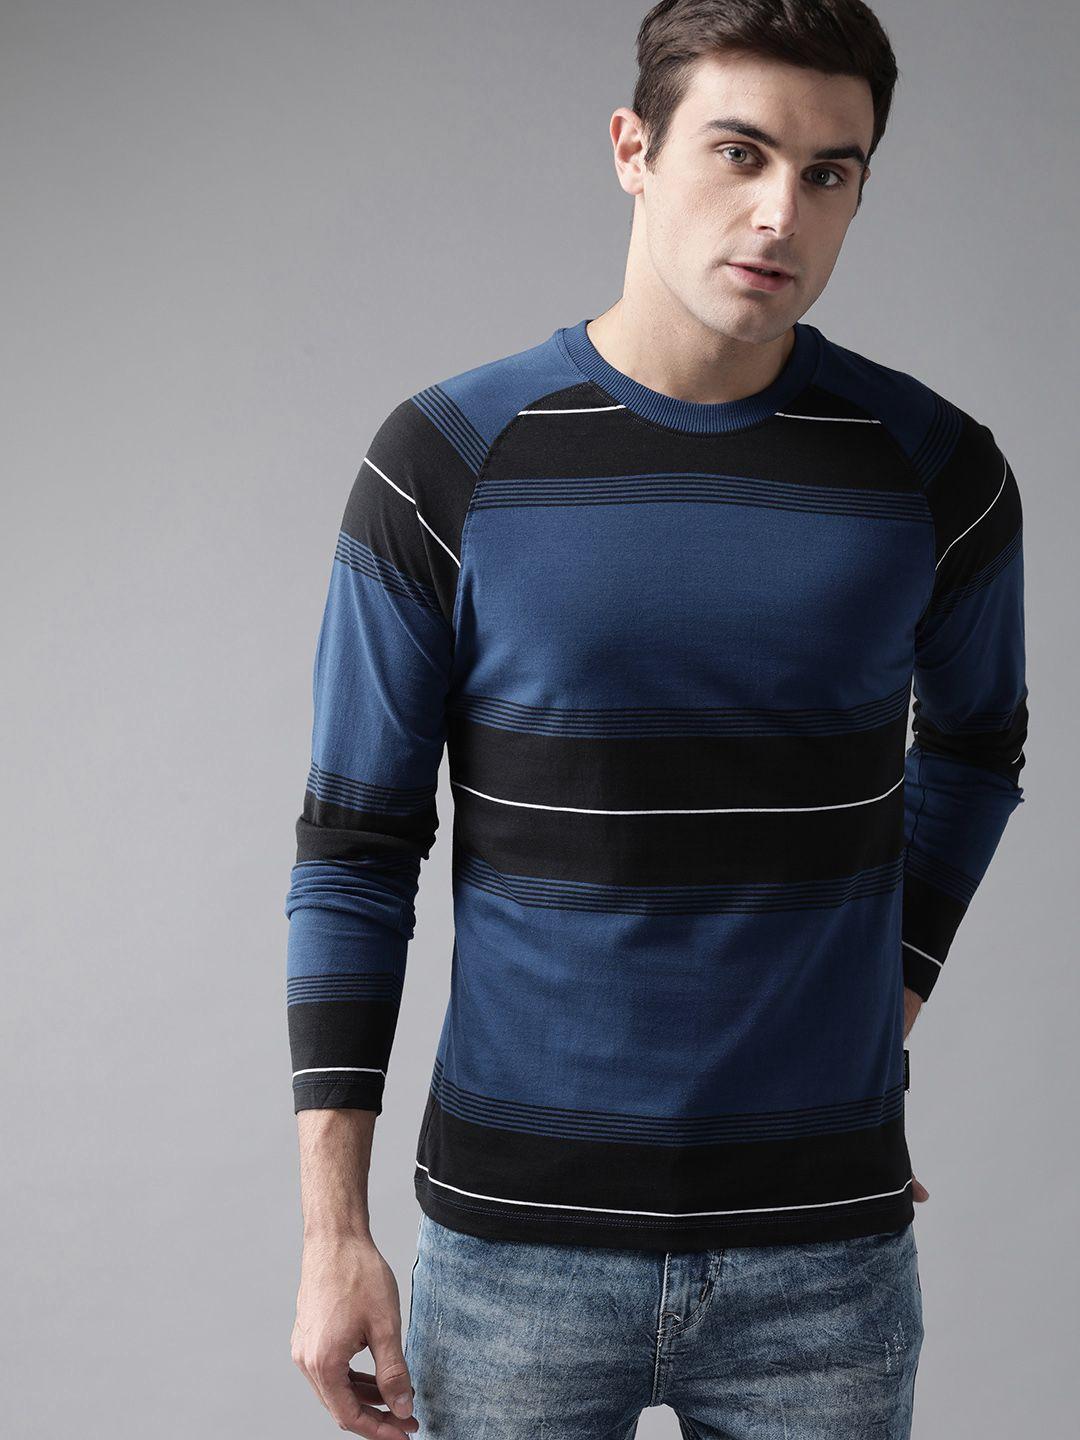 roadster men navy blue & black striped round neck t-shirt